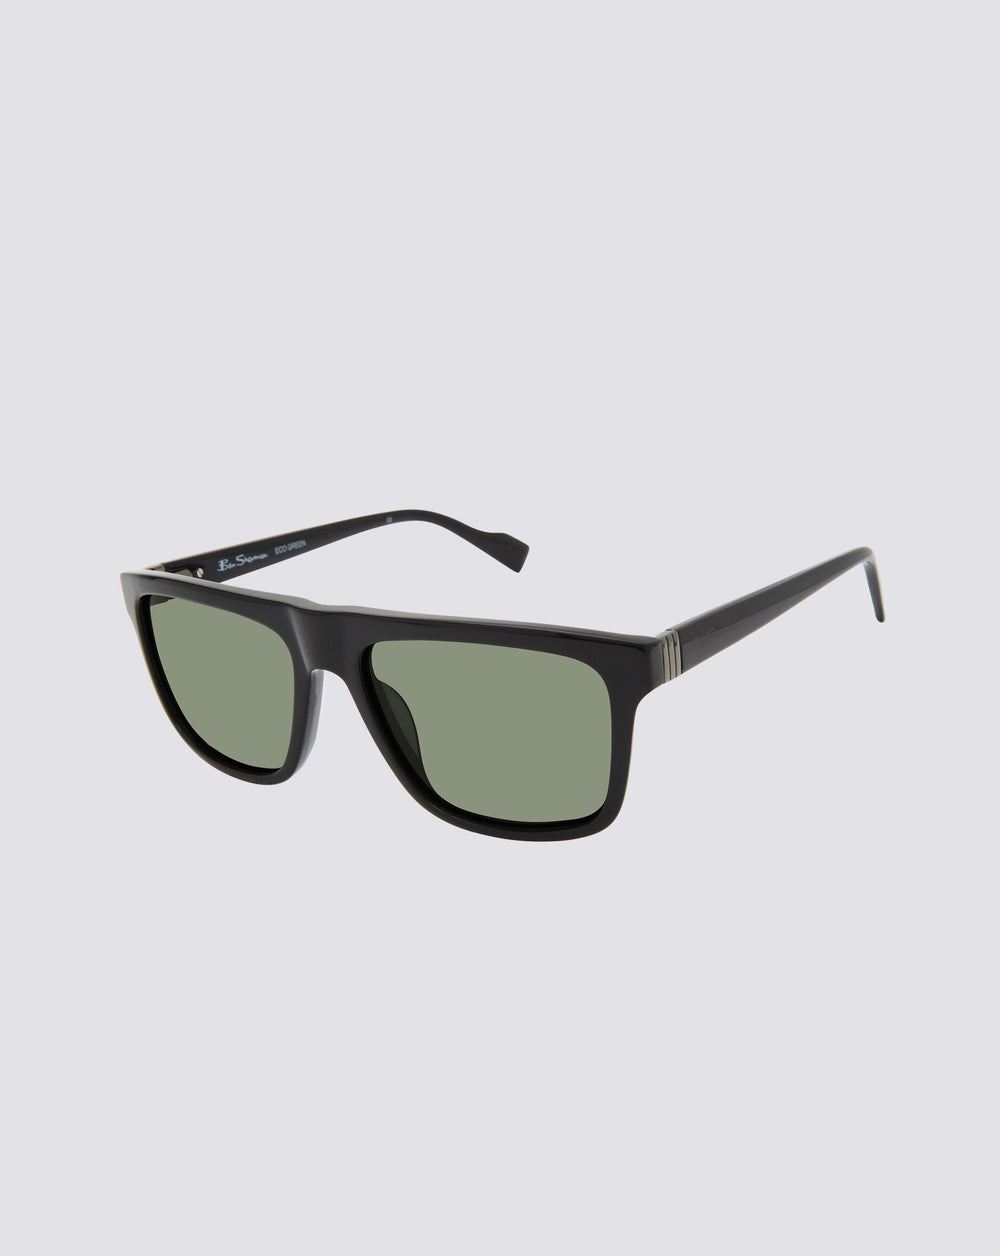 New Square Pilot Sunglasses Mens Fashion Retro Driving Shades F5115 Hip Hop  | eBay